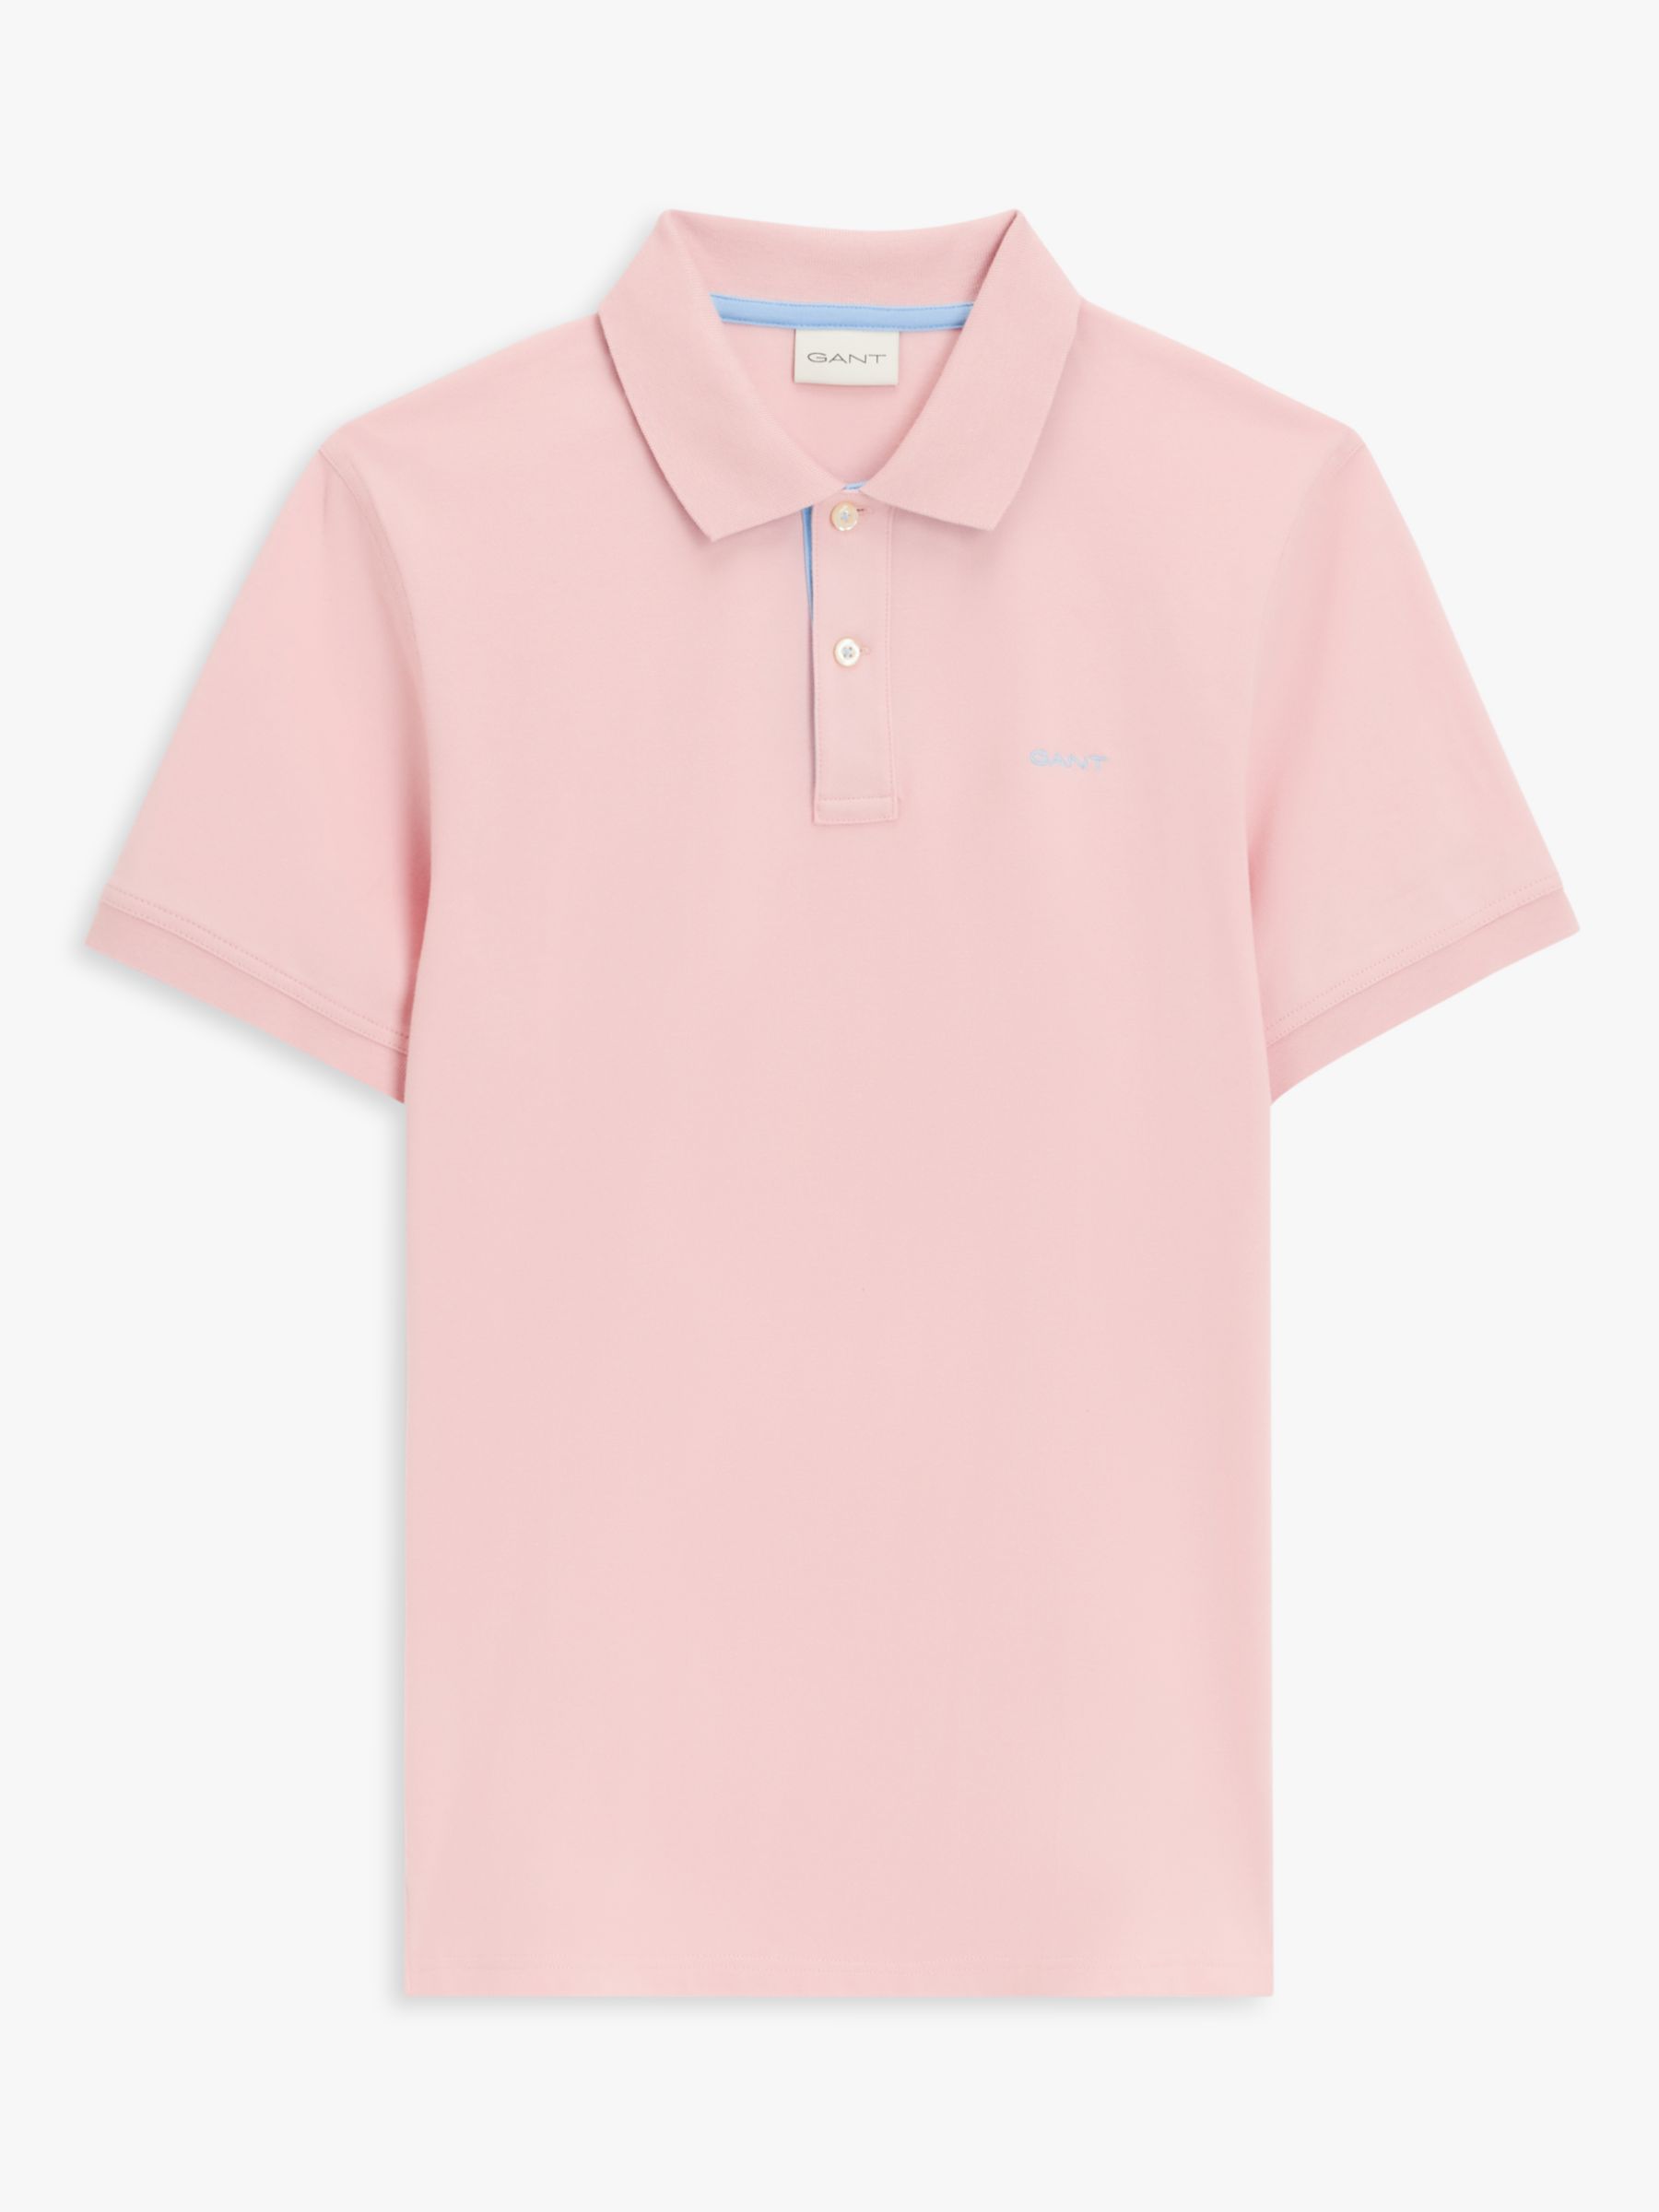 GANT Piqué Textured Short Partners Sleeve & John Shirt, at Pink Polo Faded Lewis